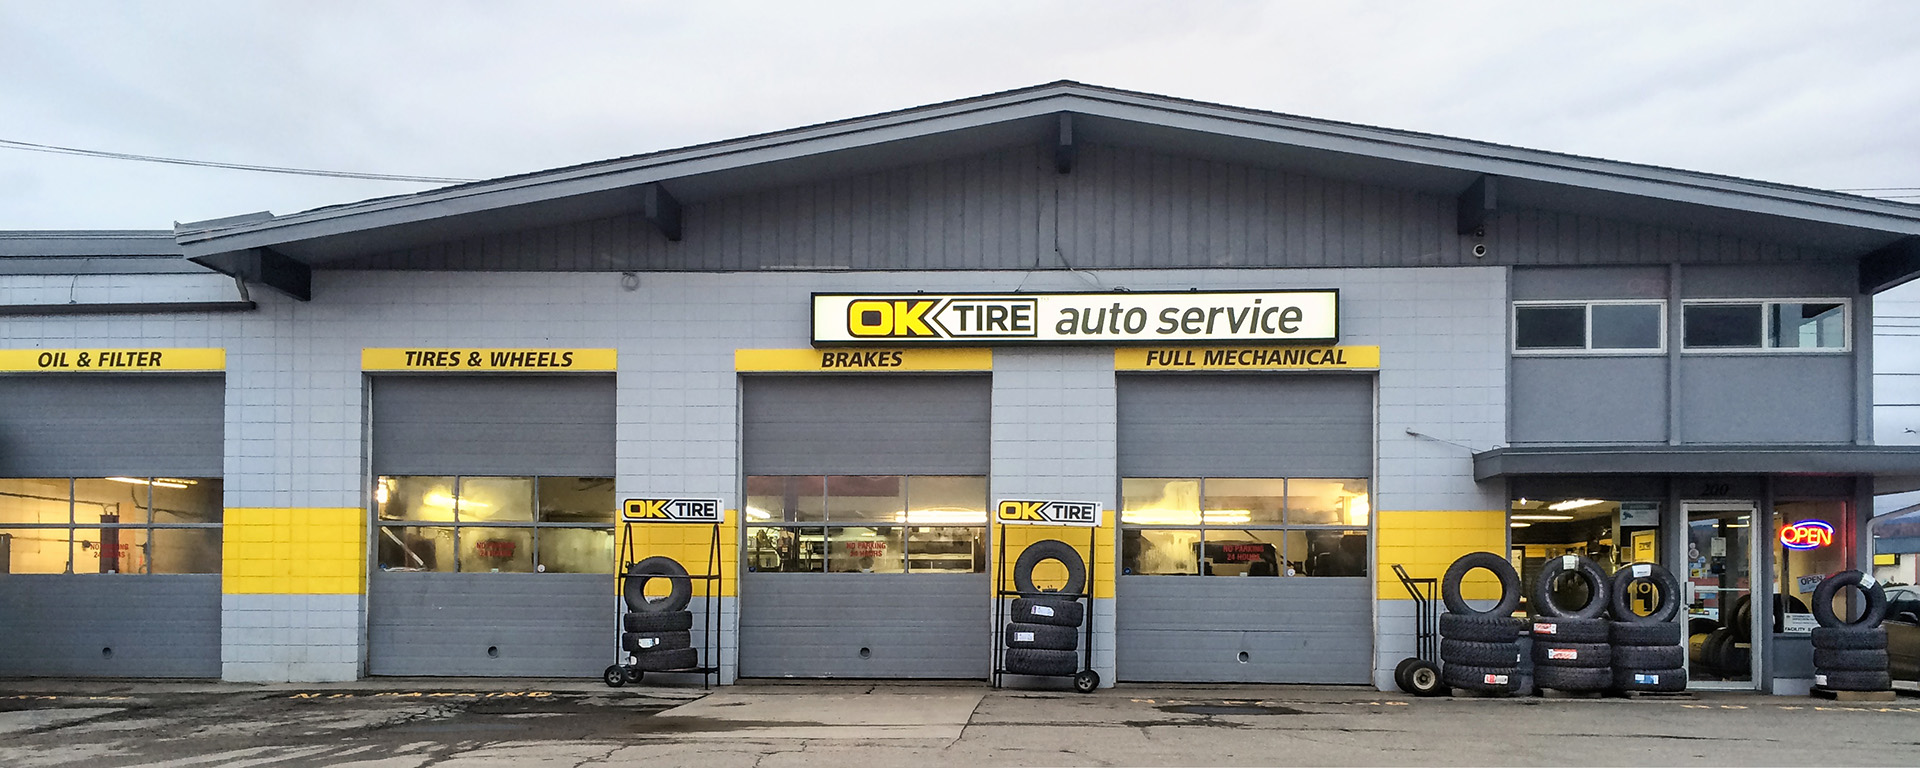 OK Tire and Auto Service in Cranbrook, BC 